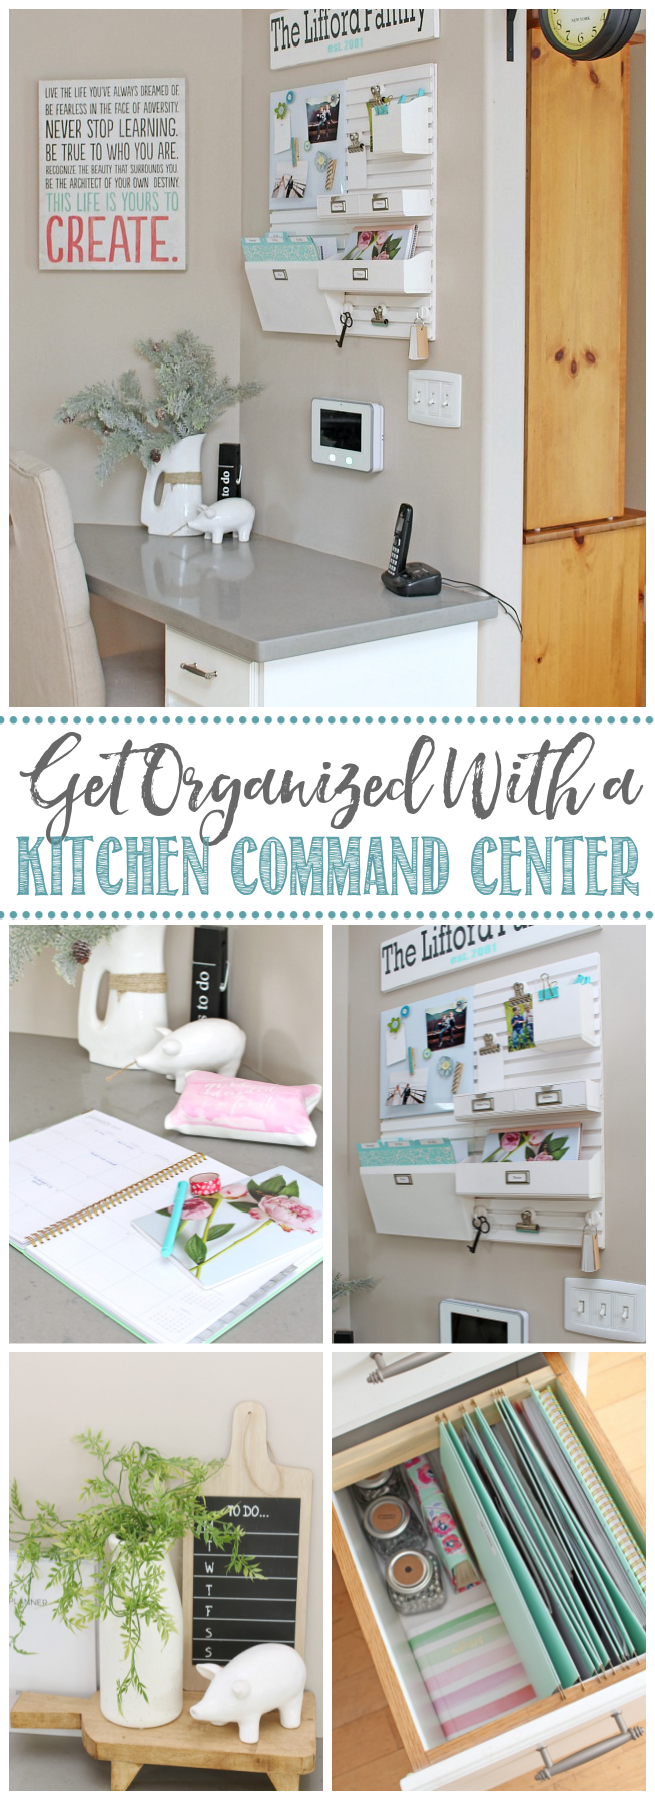 Organized kitchen command system.